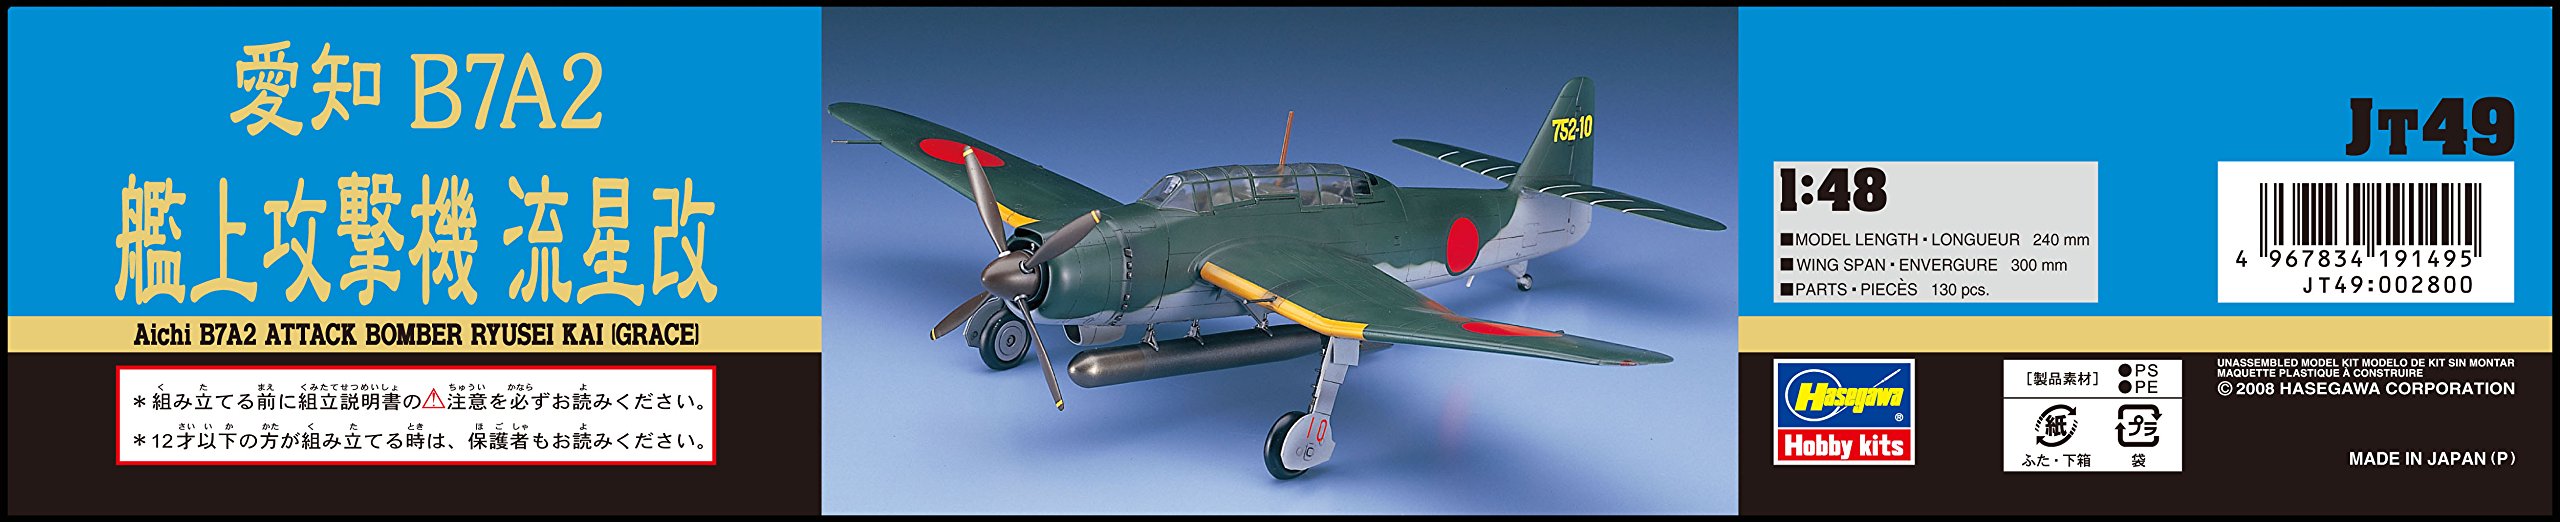 HASEGAWA 1/48 Aichi B7A2 Attack Bomber Ryusei Kai Grace Plastic Model